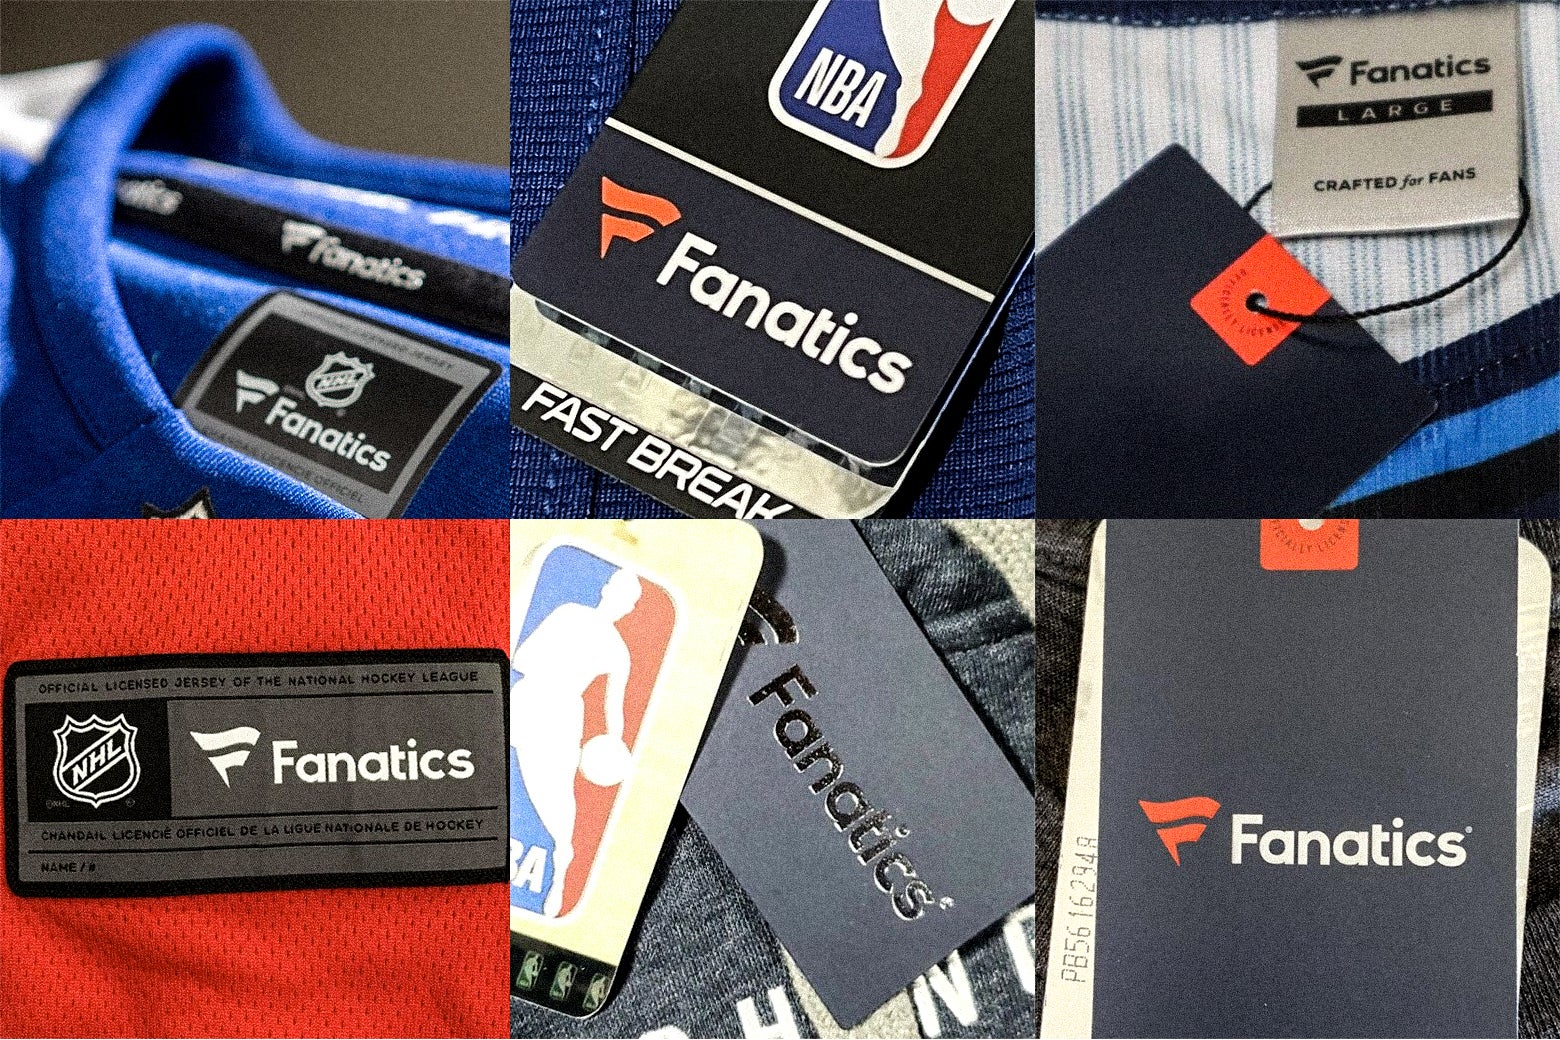 A grid showing the Fanatics logo on NFL, NBA, MLB, and NHL jerseys.